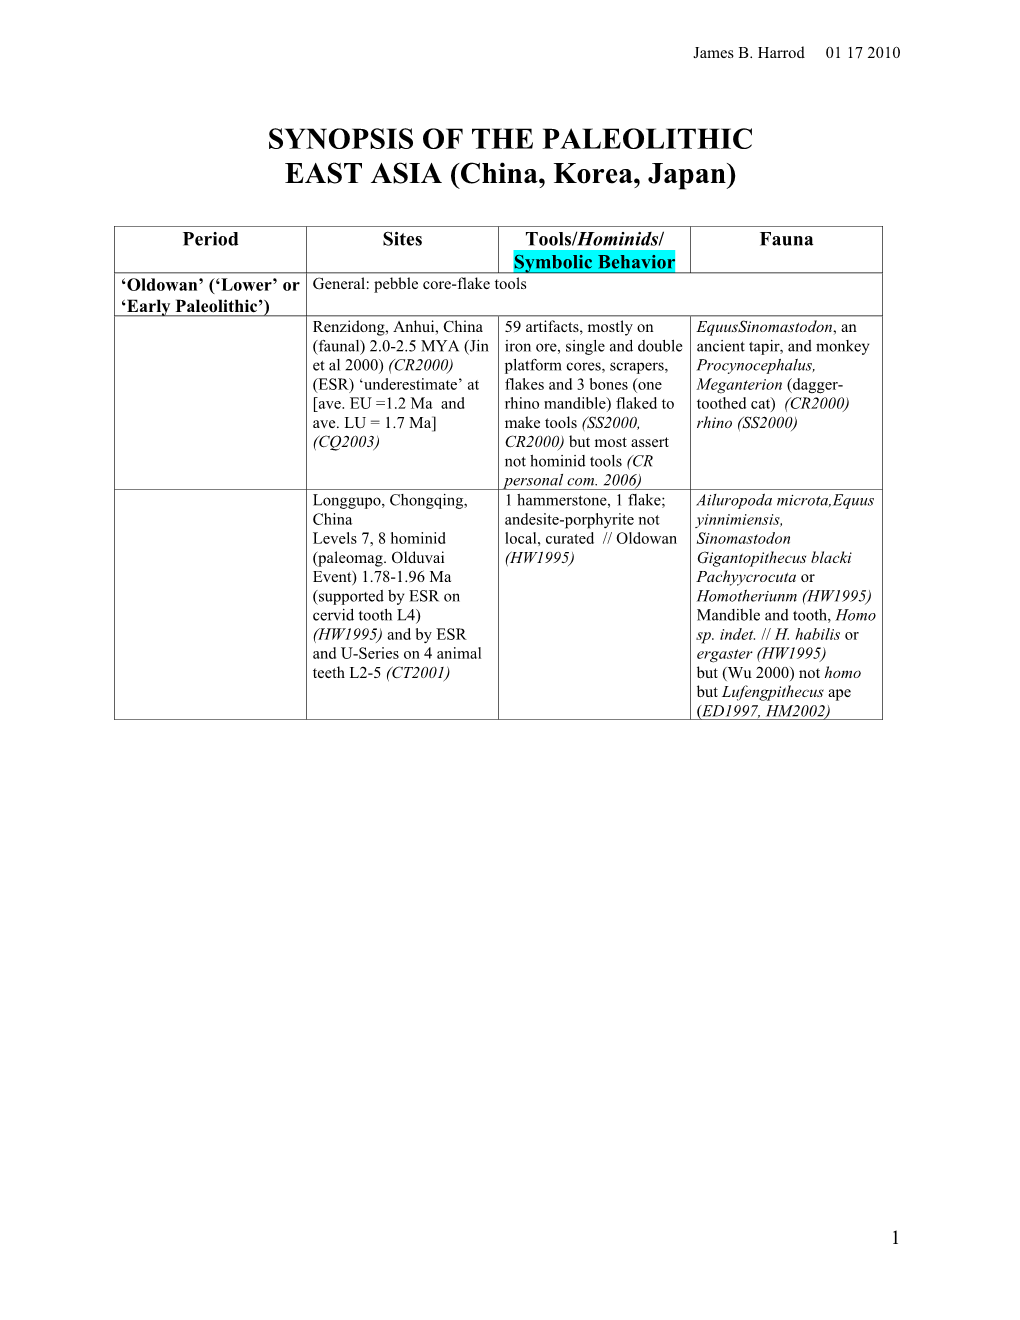 SYNOPSIS of the PALEOLITHIC EAST ASIA (China, Korea, Japan)